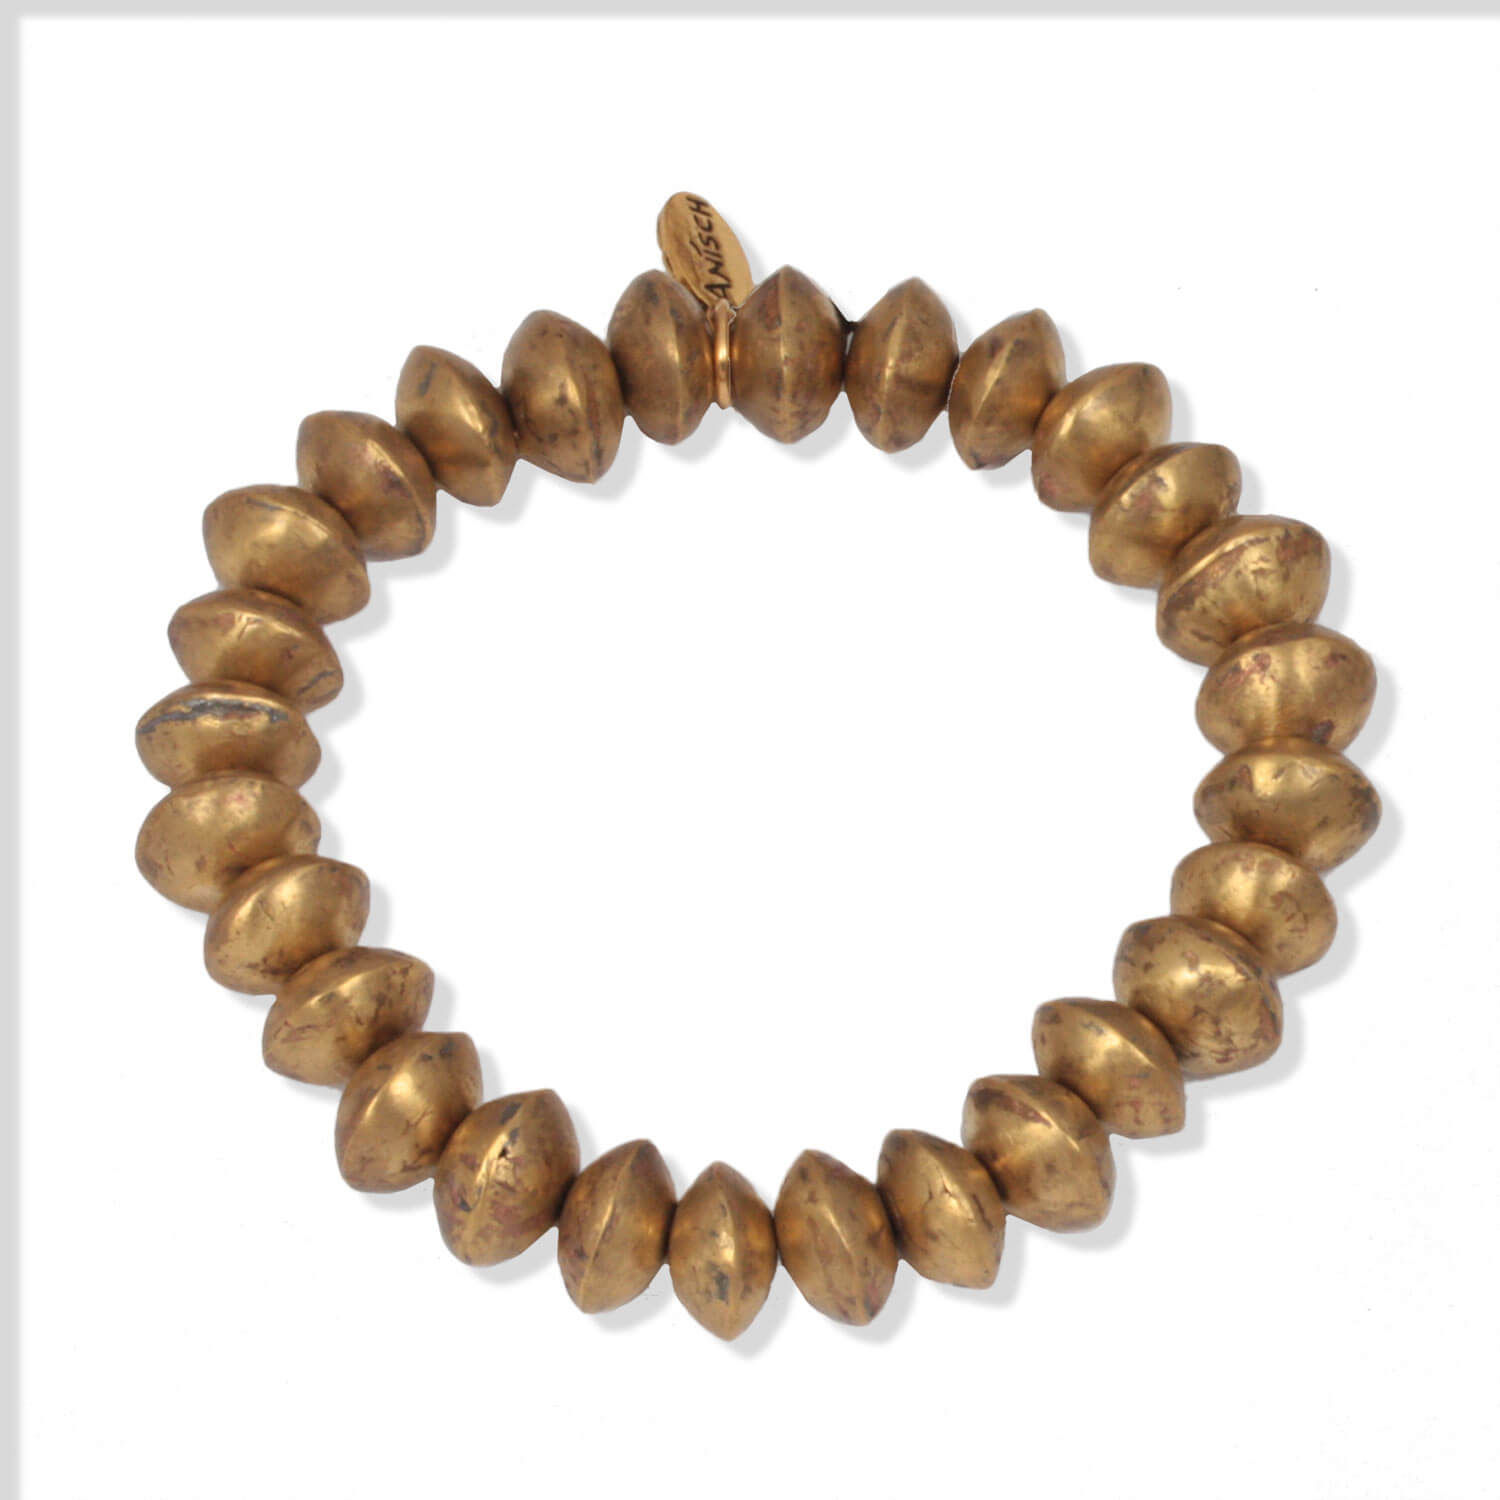 Golden Tuareg Beads - Armband nach Jahrtausende alte Tradition